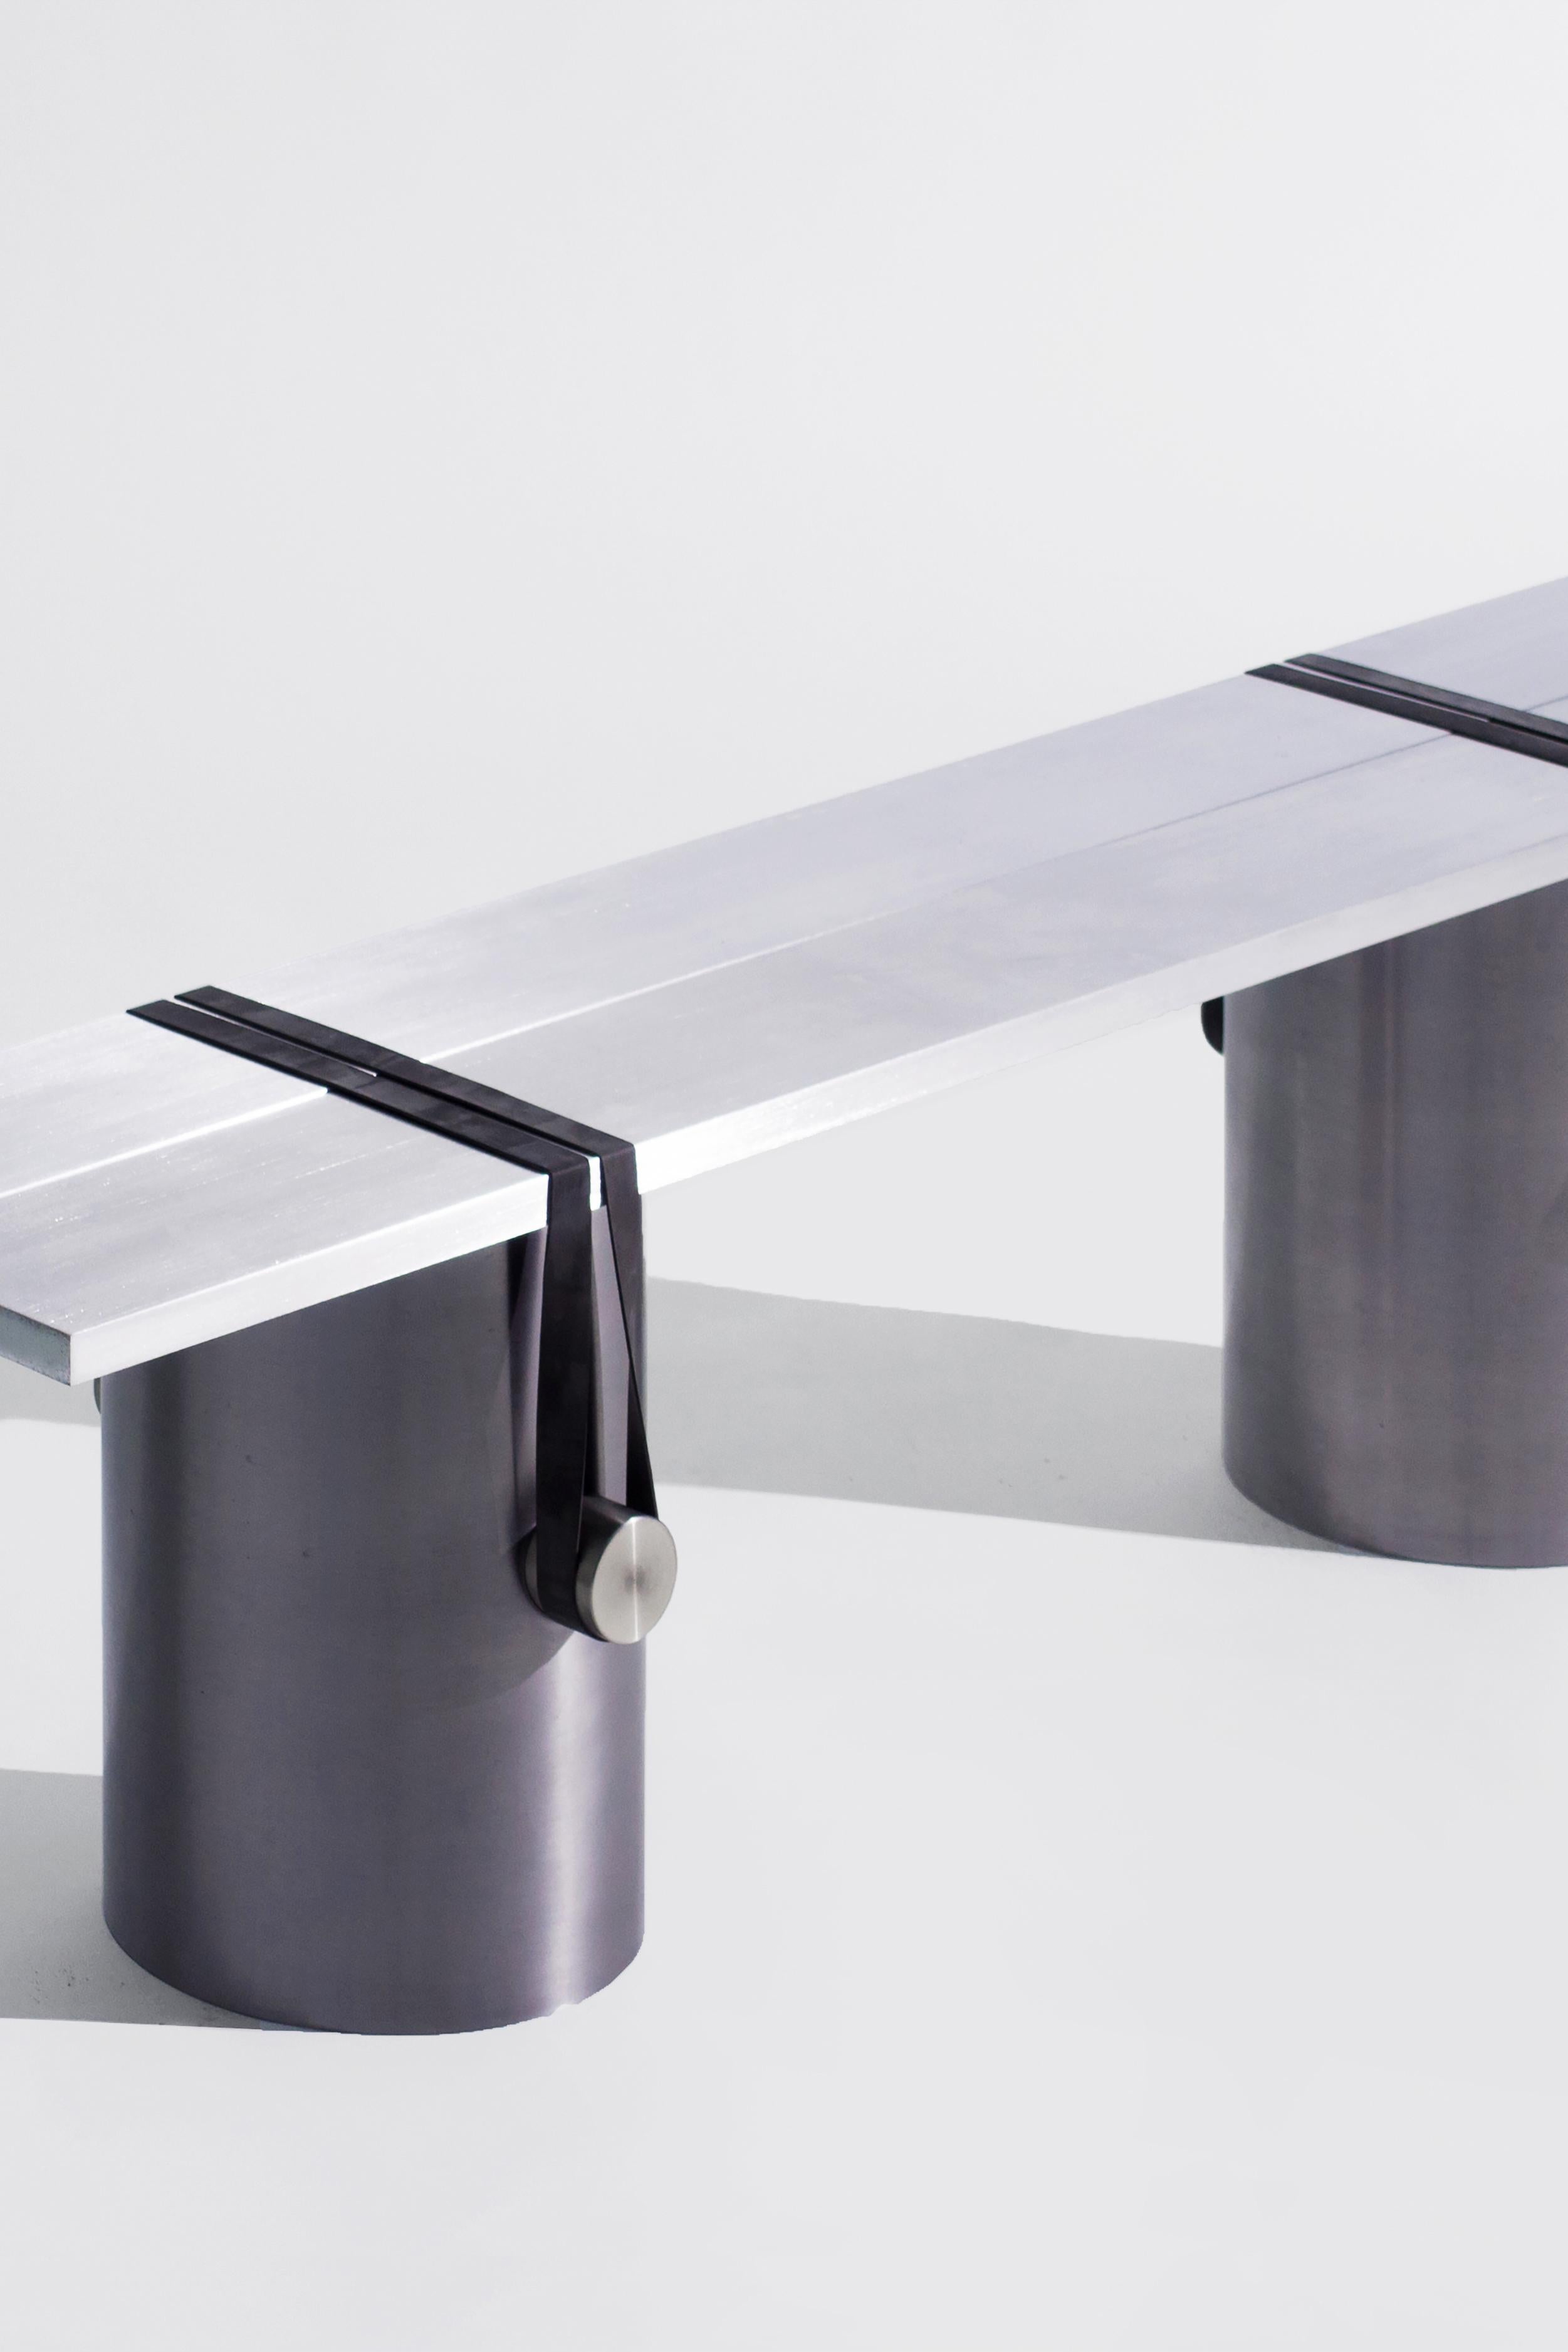 Modern Stainless Steel Contemporary Bench by Johan Viladrich